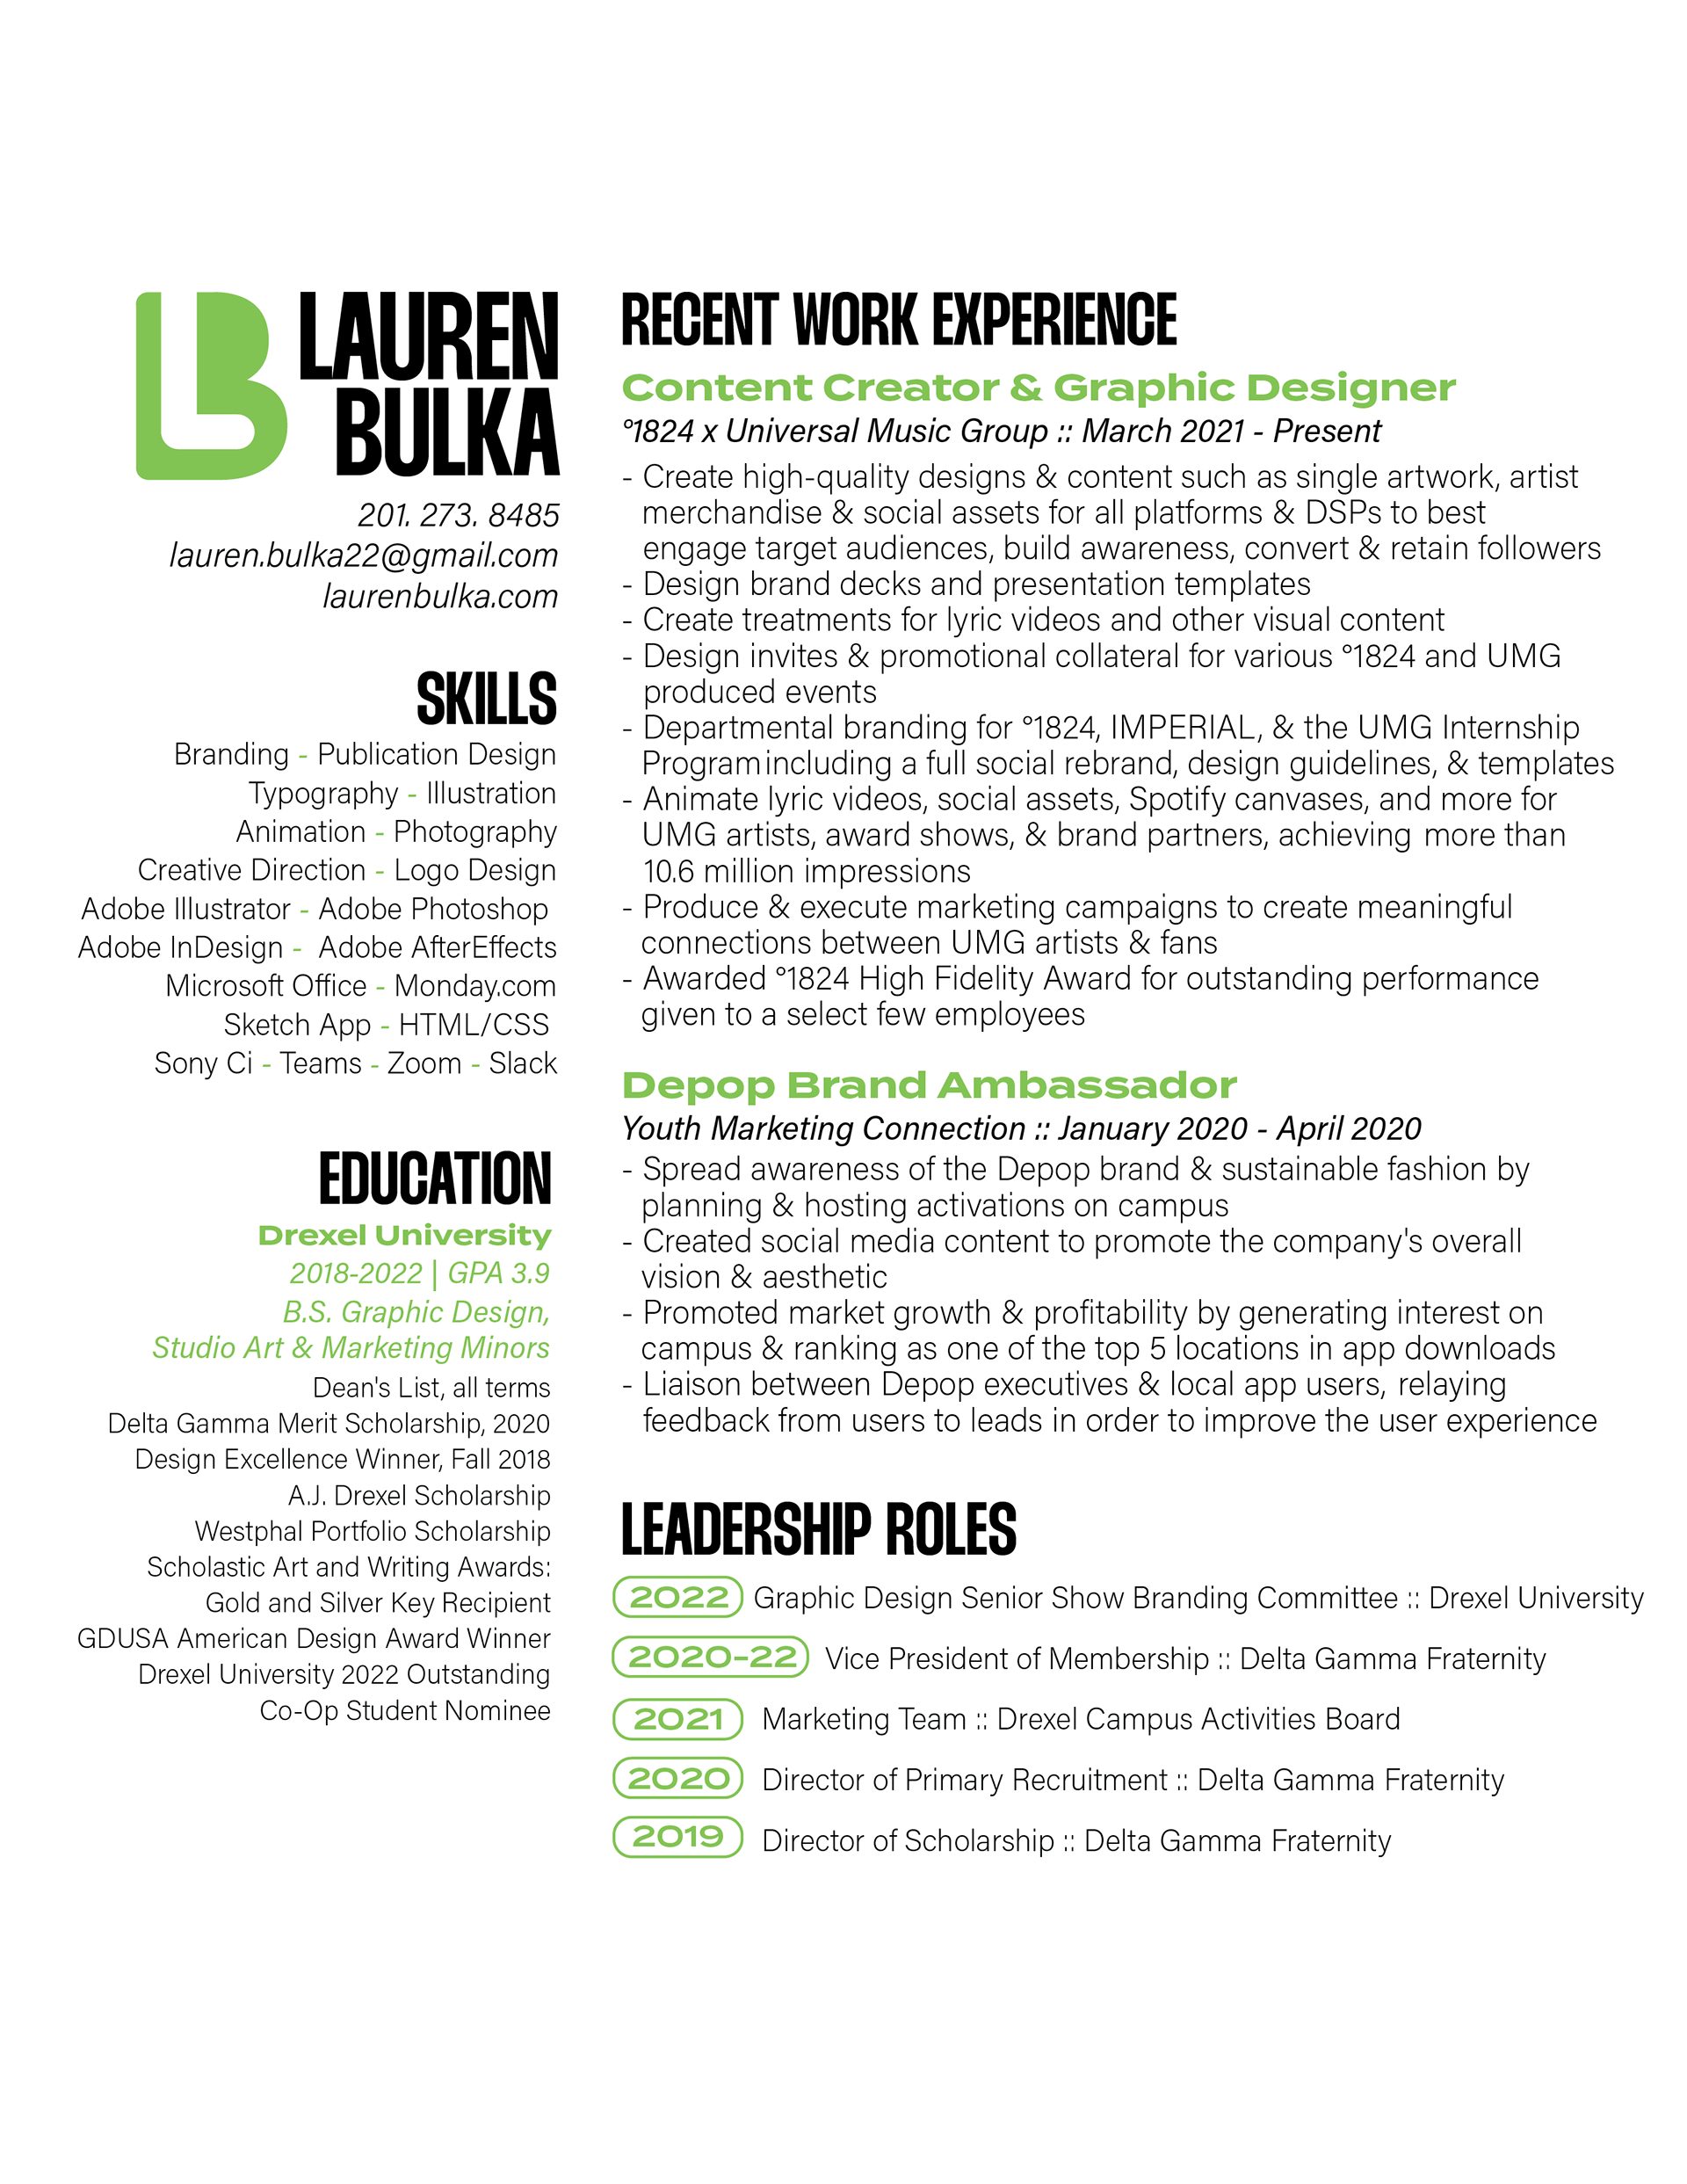 Lauren Bulka - Graphic Designer - resume